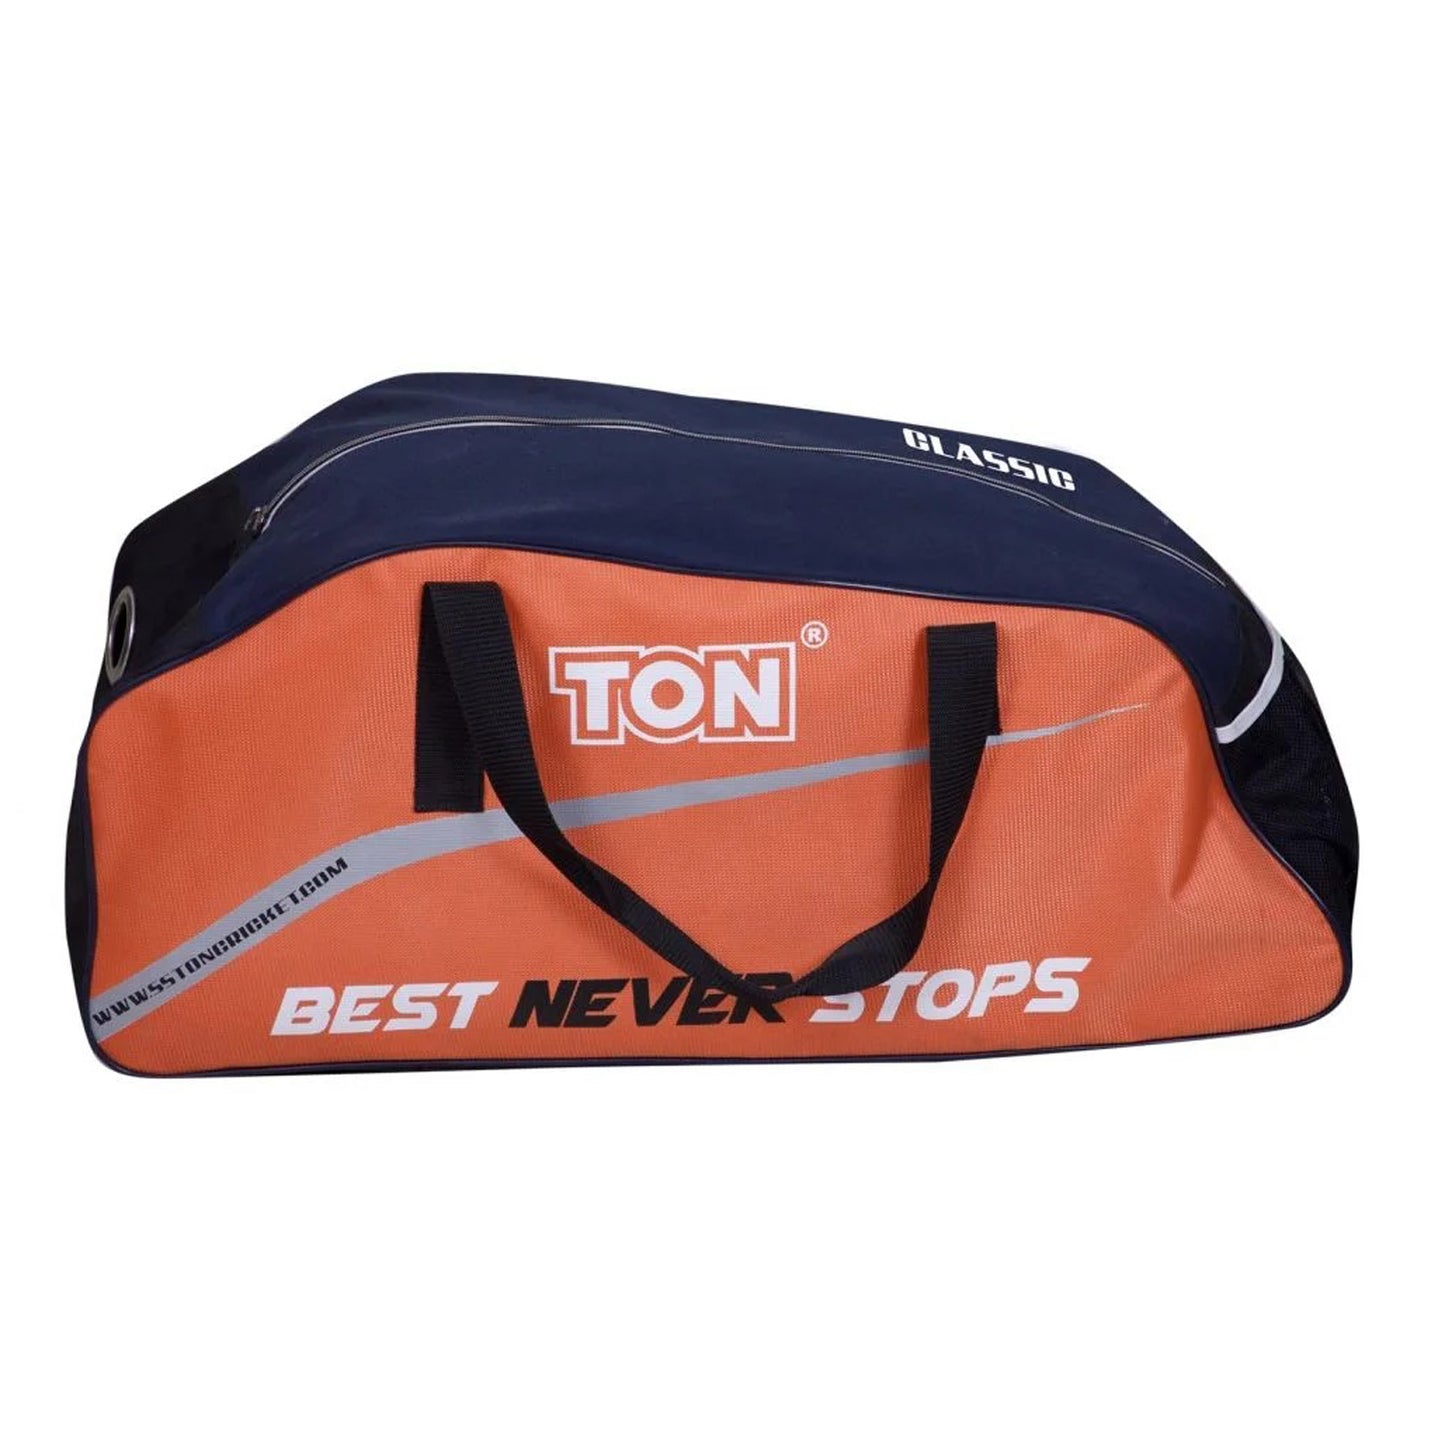 SS Ton Classic Cricket Kit Bag - Best Price online Prokicksports.com